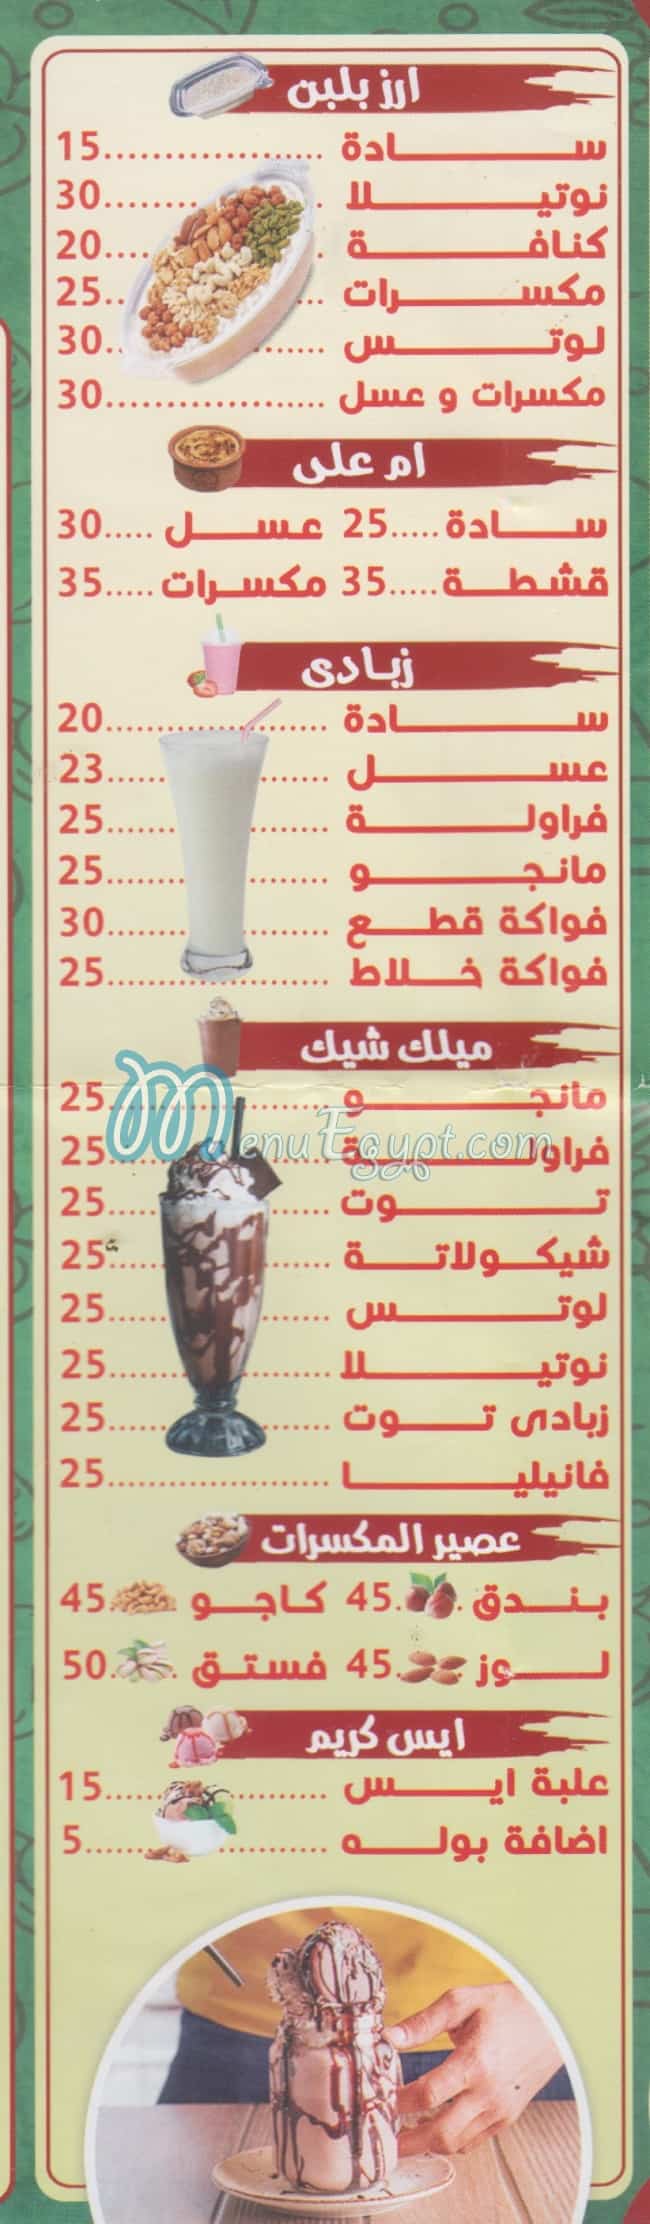 Cit Drink menu Egypt 2